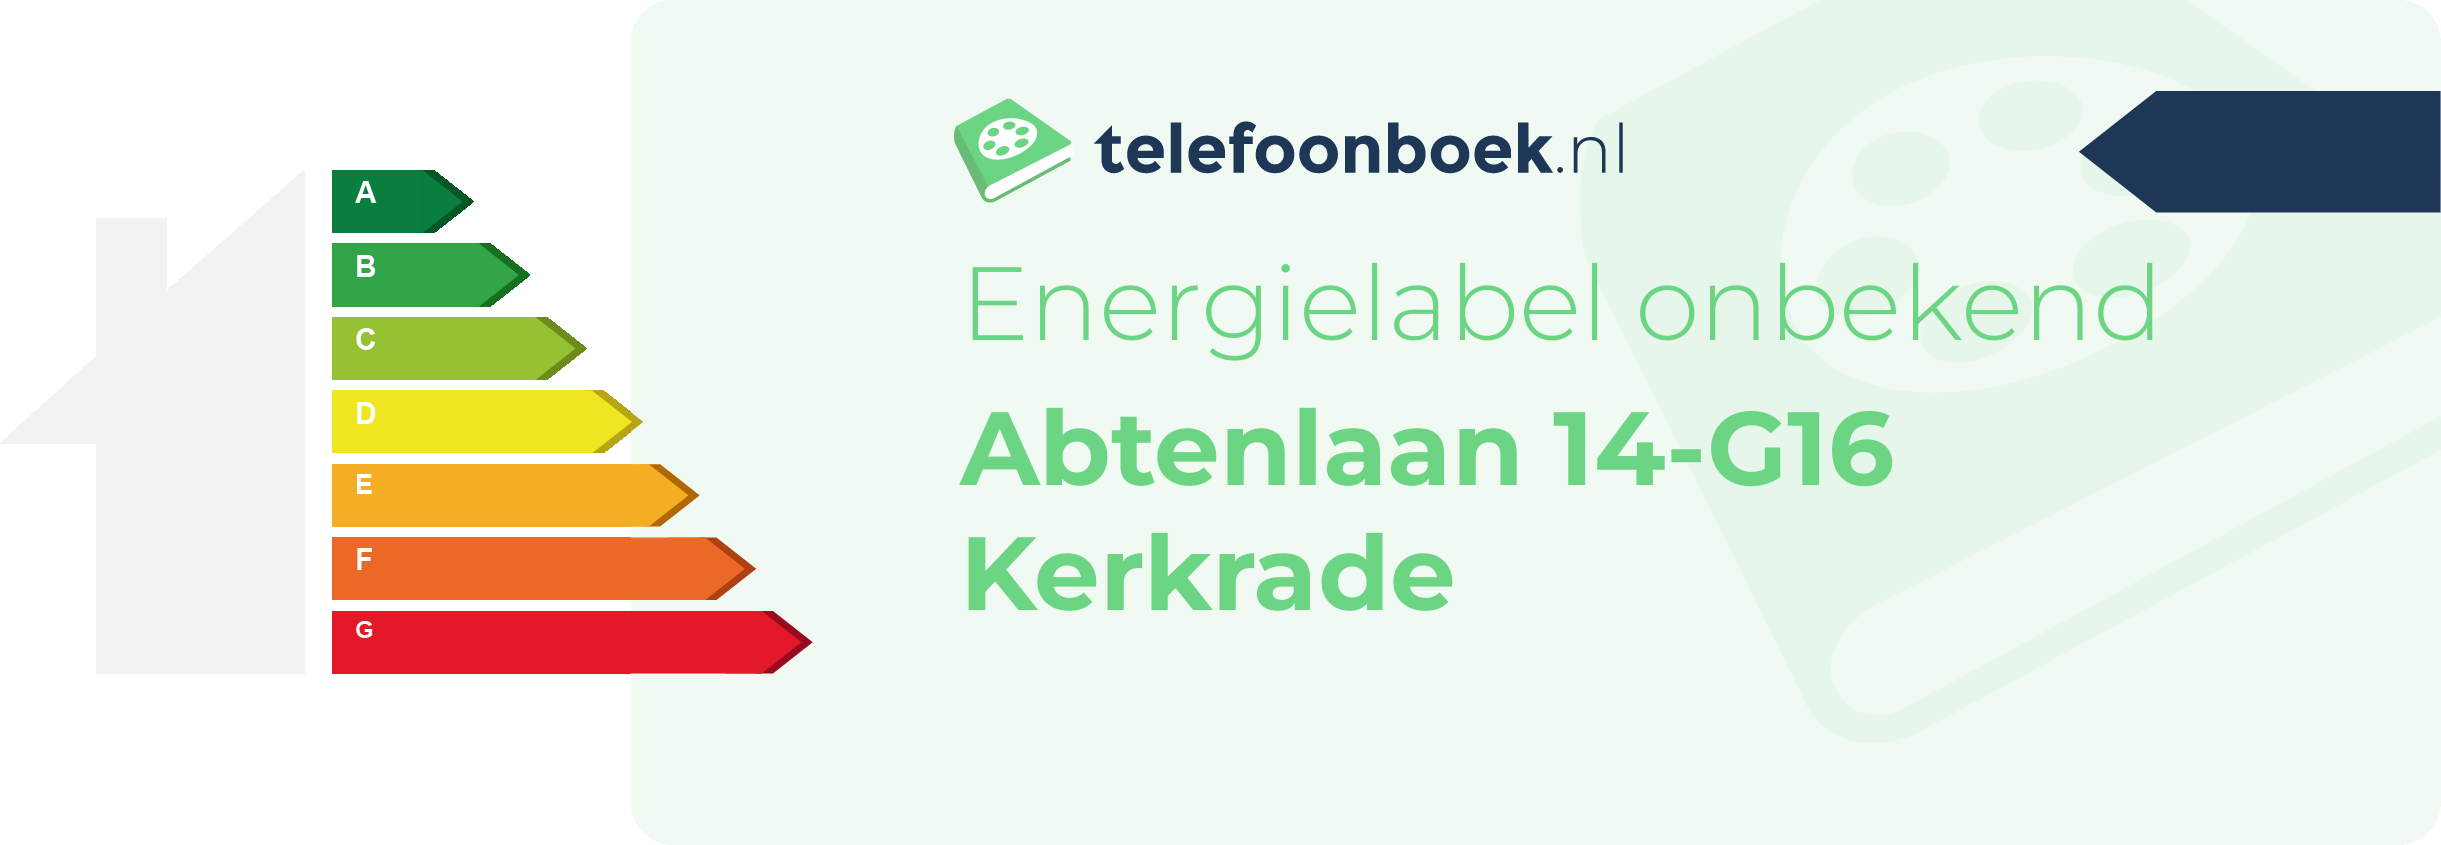 Energielabel Abtenlaan 14-G16 Kerkrade